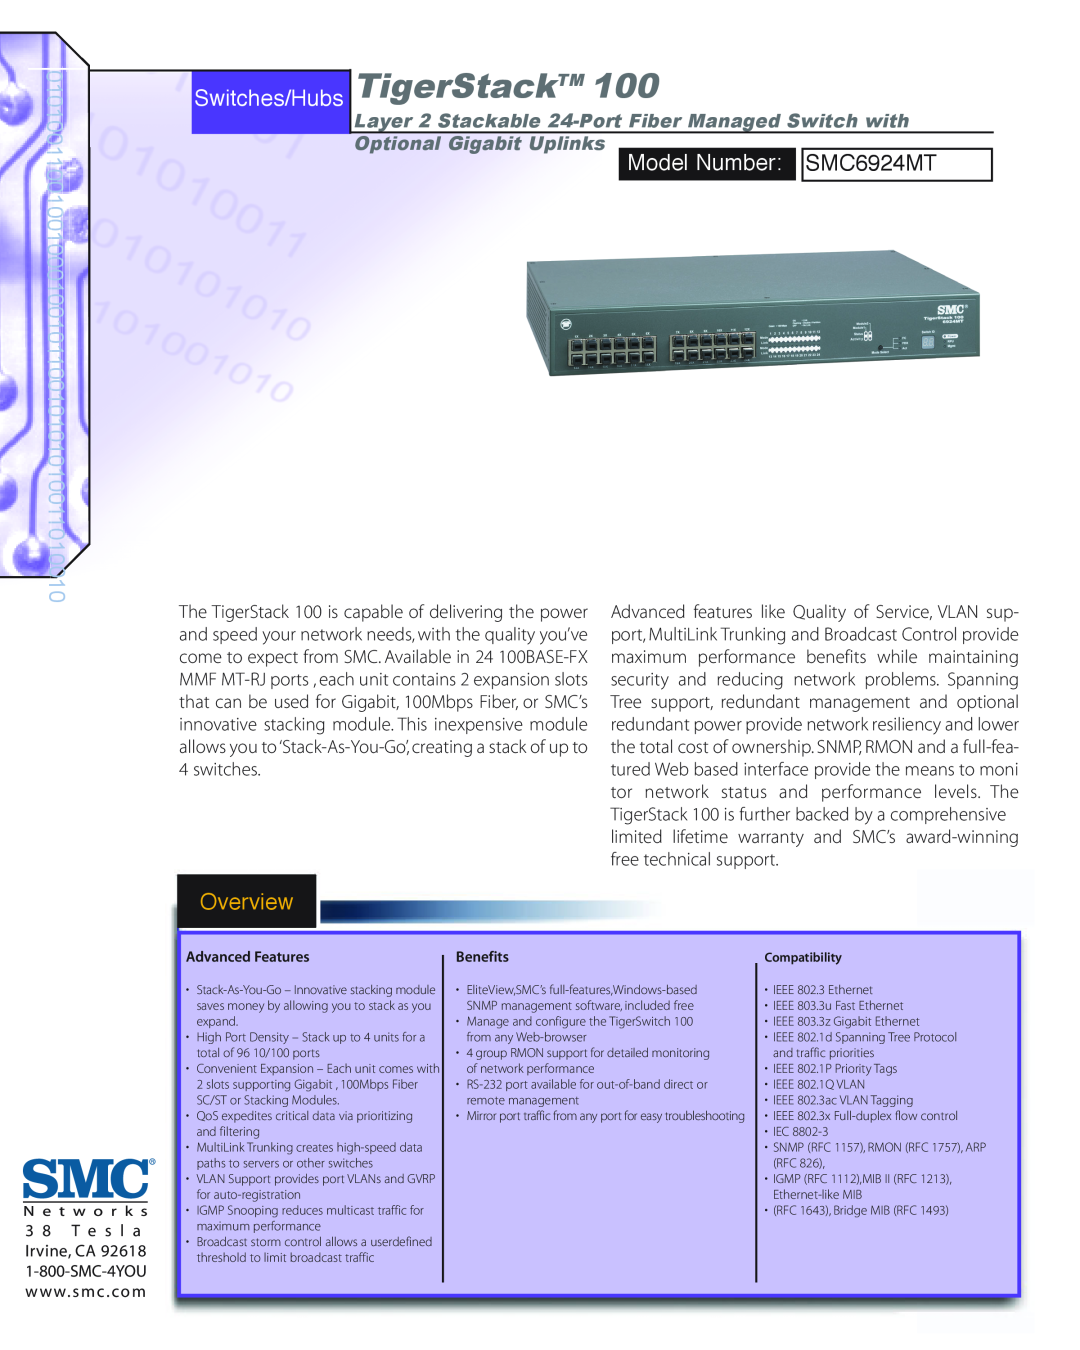 SMC Networks SMC6924MT warranty Layer 2 Stackable 24-Port Fiber Managed Switch with, Optional Gigabit Uplinks, Overview 